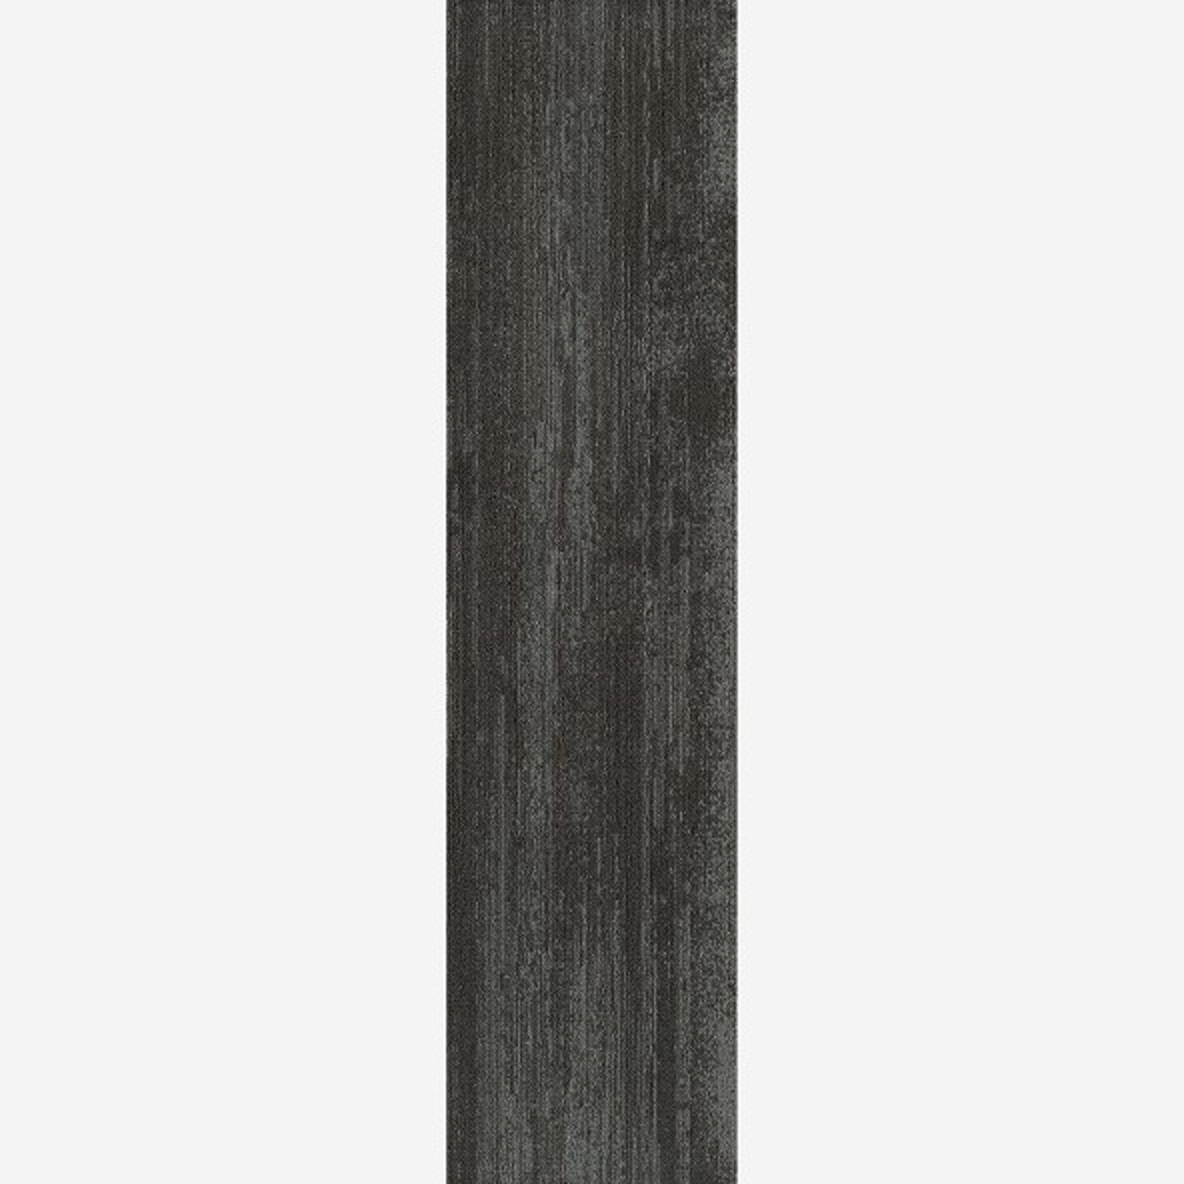 Ingrained Commercial Carpet Plank Neutral .28 Inch x 25 cm x 1 Meter Per Plank Pewter Ebony Full Tile